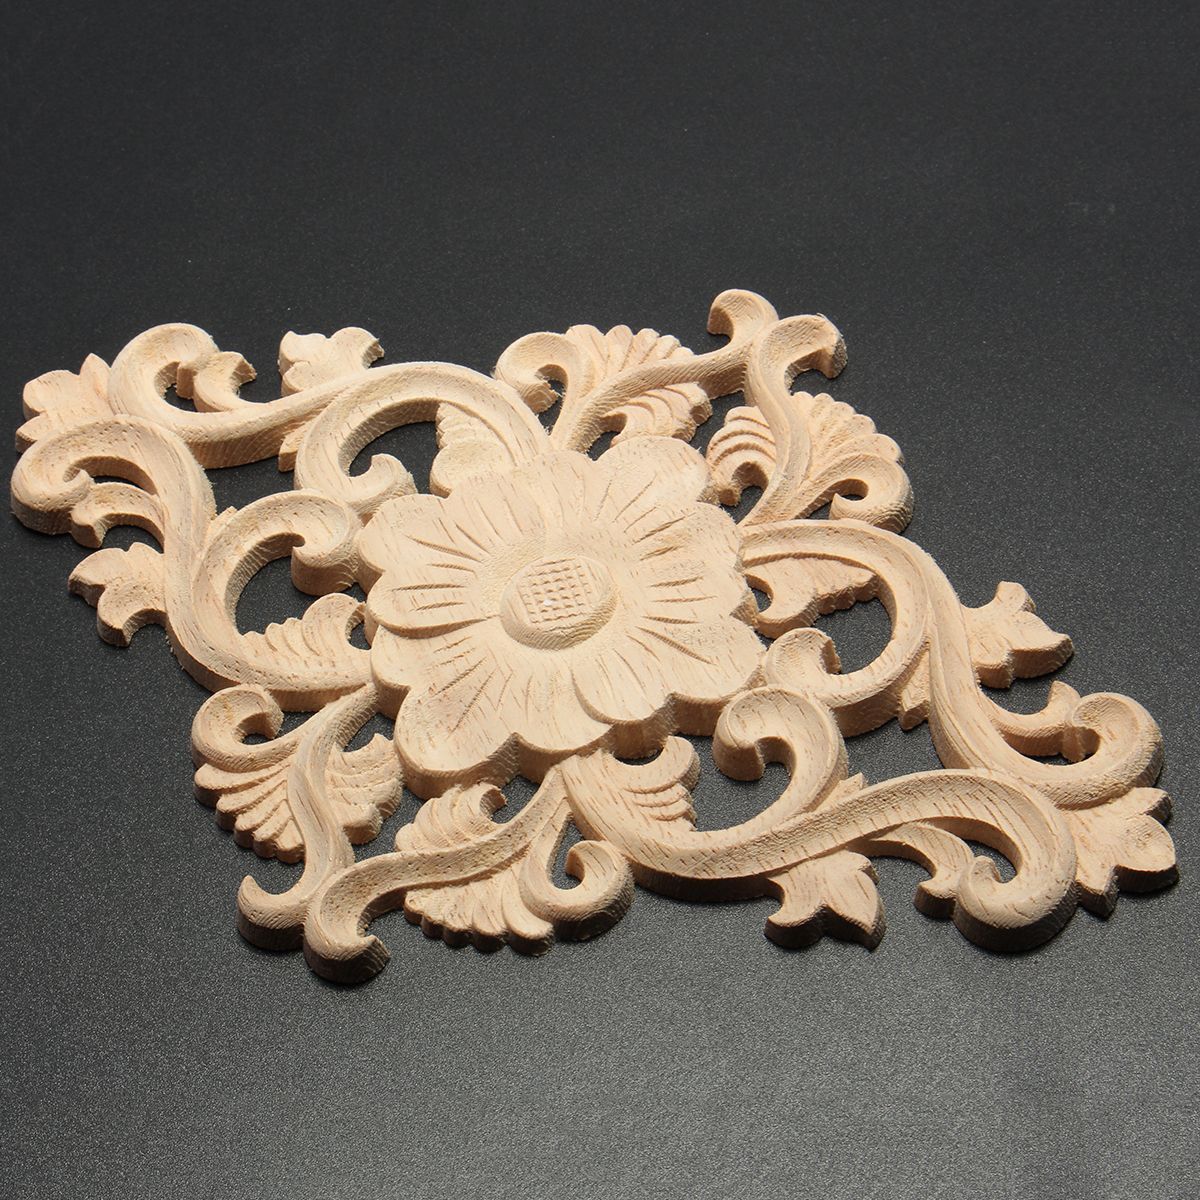 Wood-Carving-Applique-Unpainted-Onlay-Flower-Pattern-Door-Furniture-Cabinet-Decal-Decor-1257528